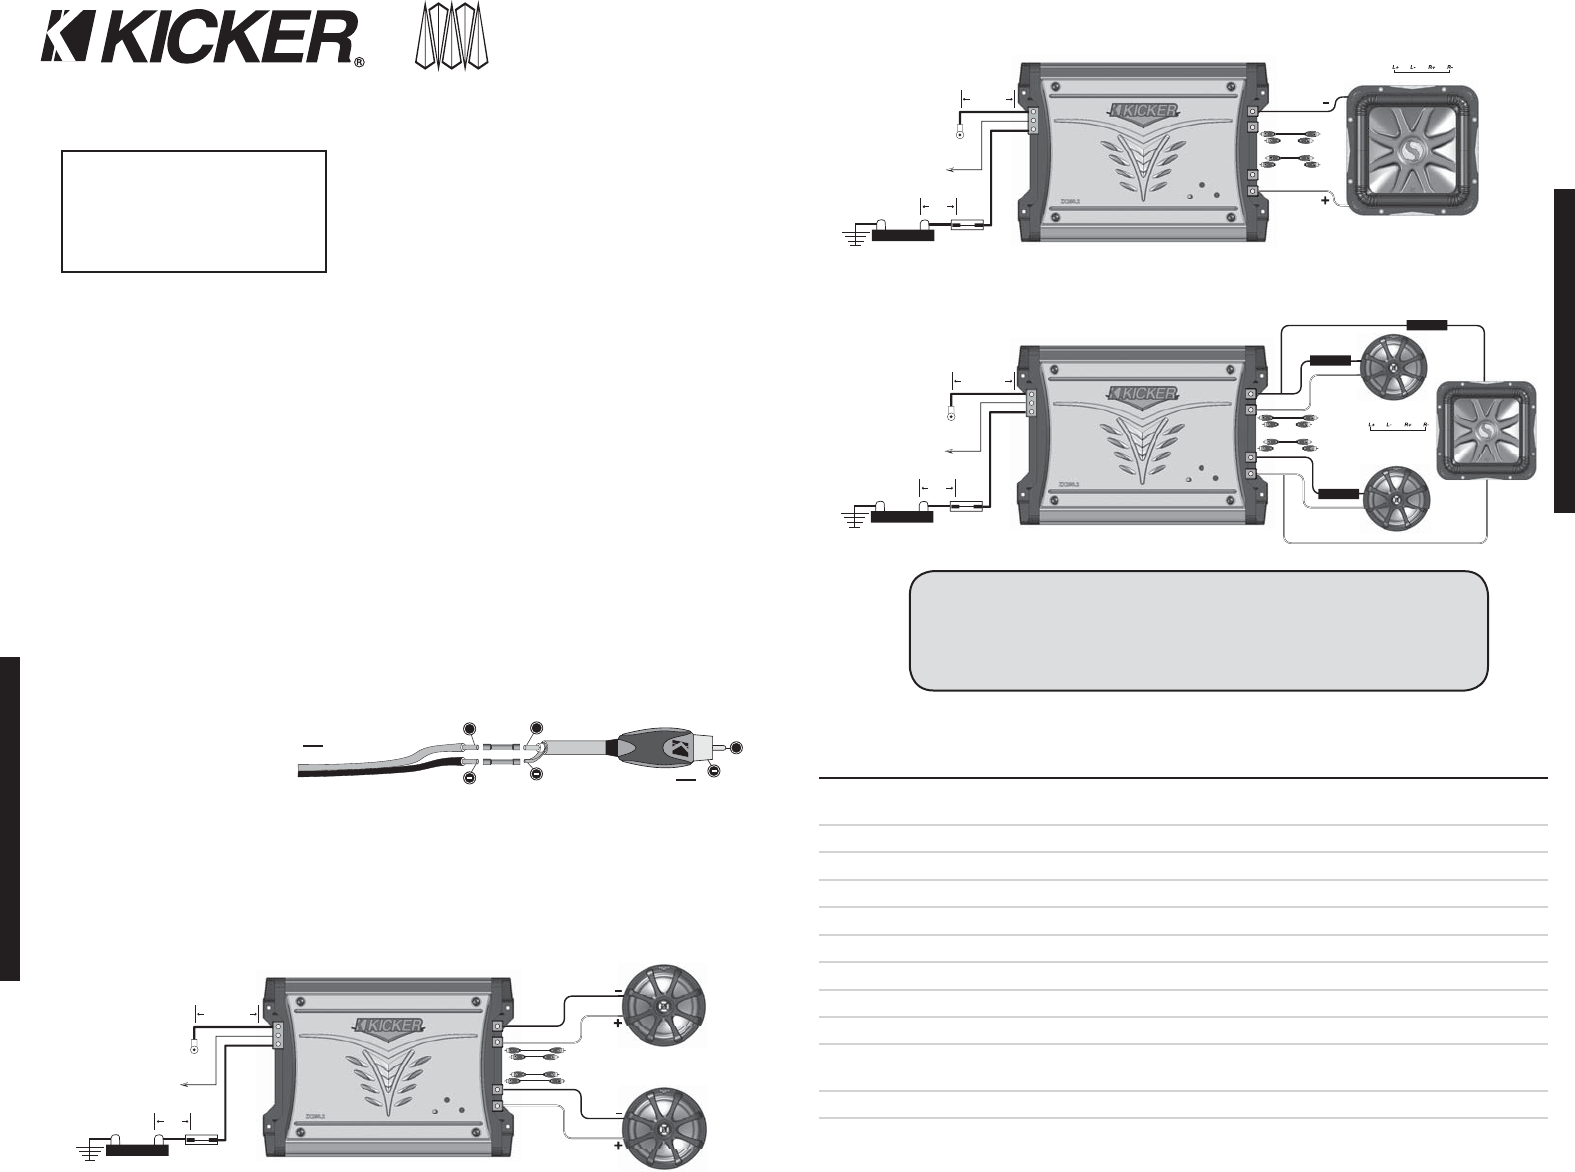 Kicker Subwoofer Wiring Diagram from diagramweb.net